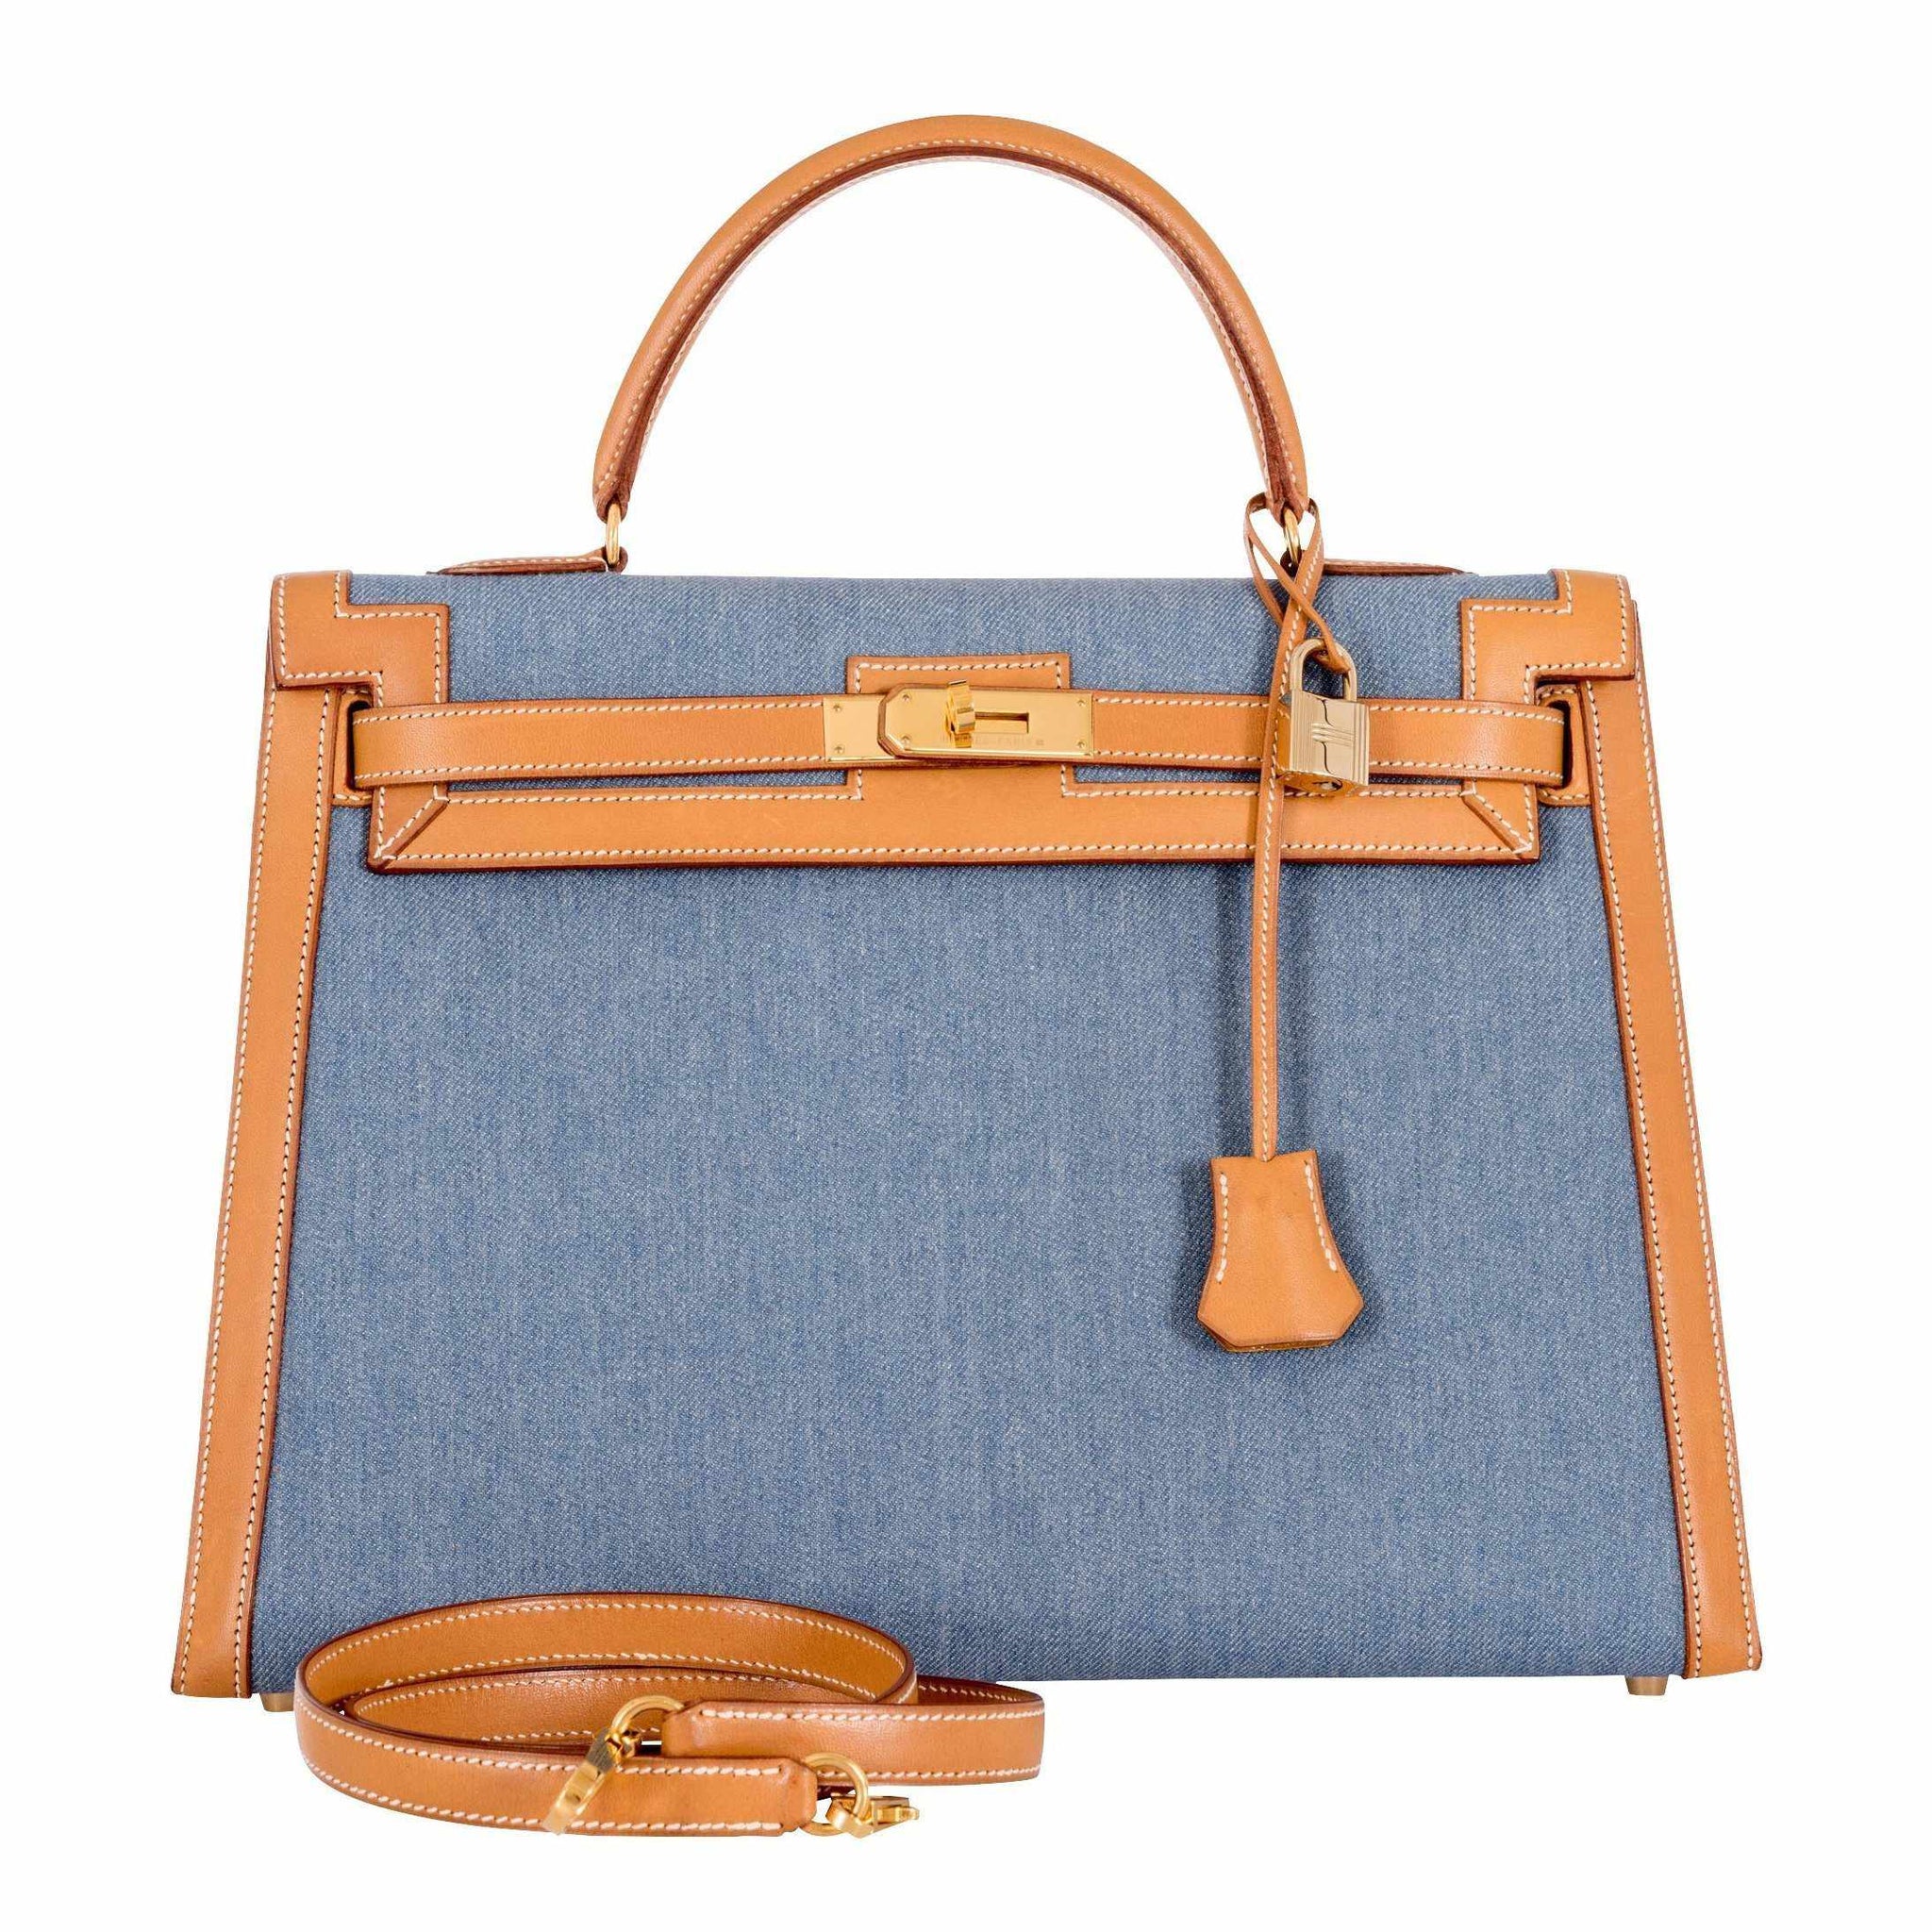 Hermès Birkin 35 handbag in blue denim and brown barenia leather, GHW